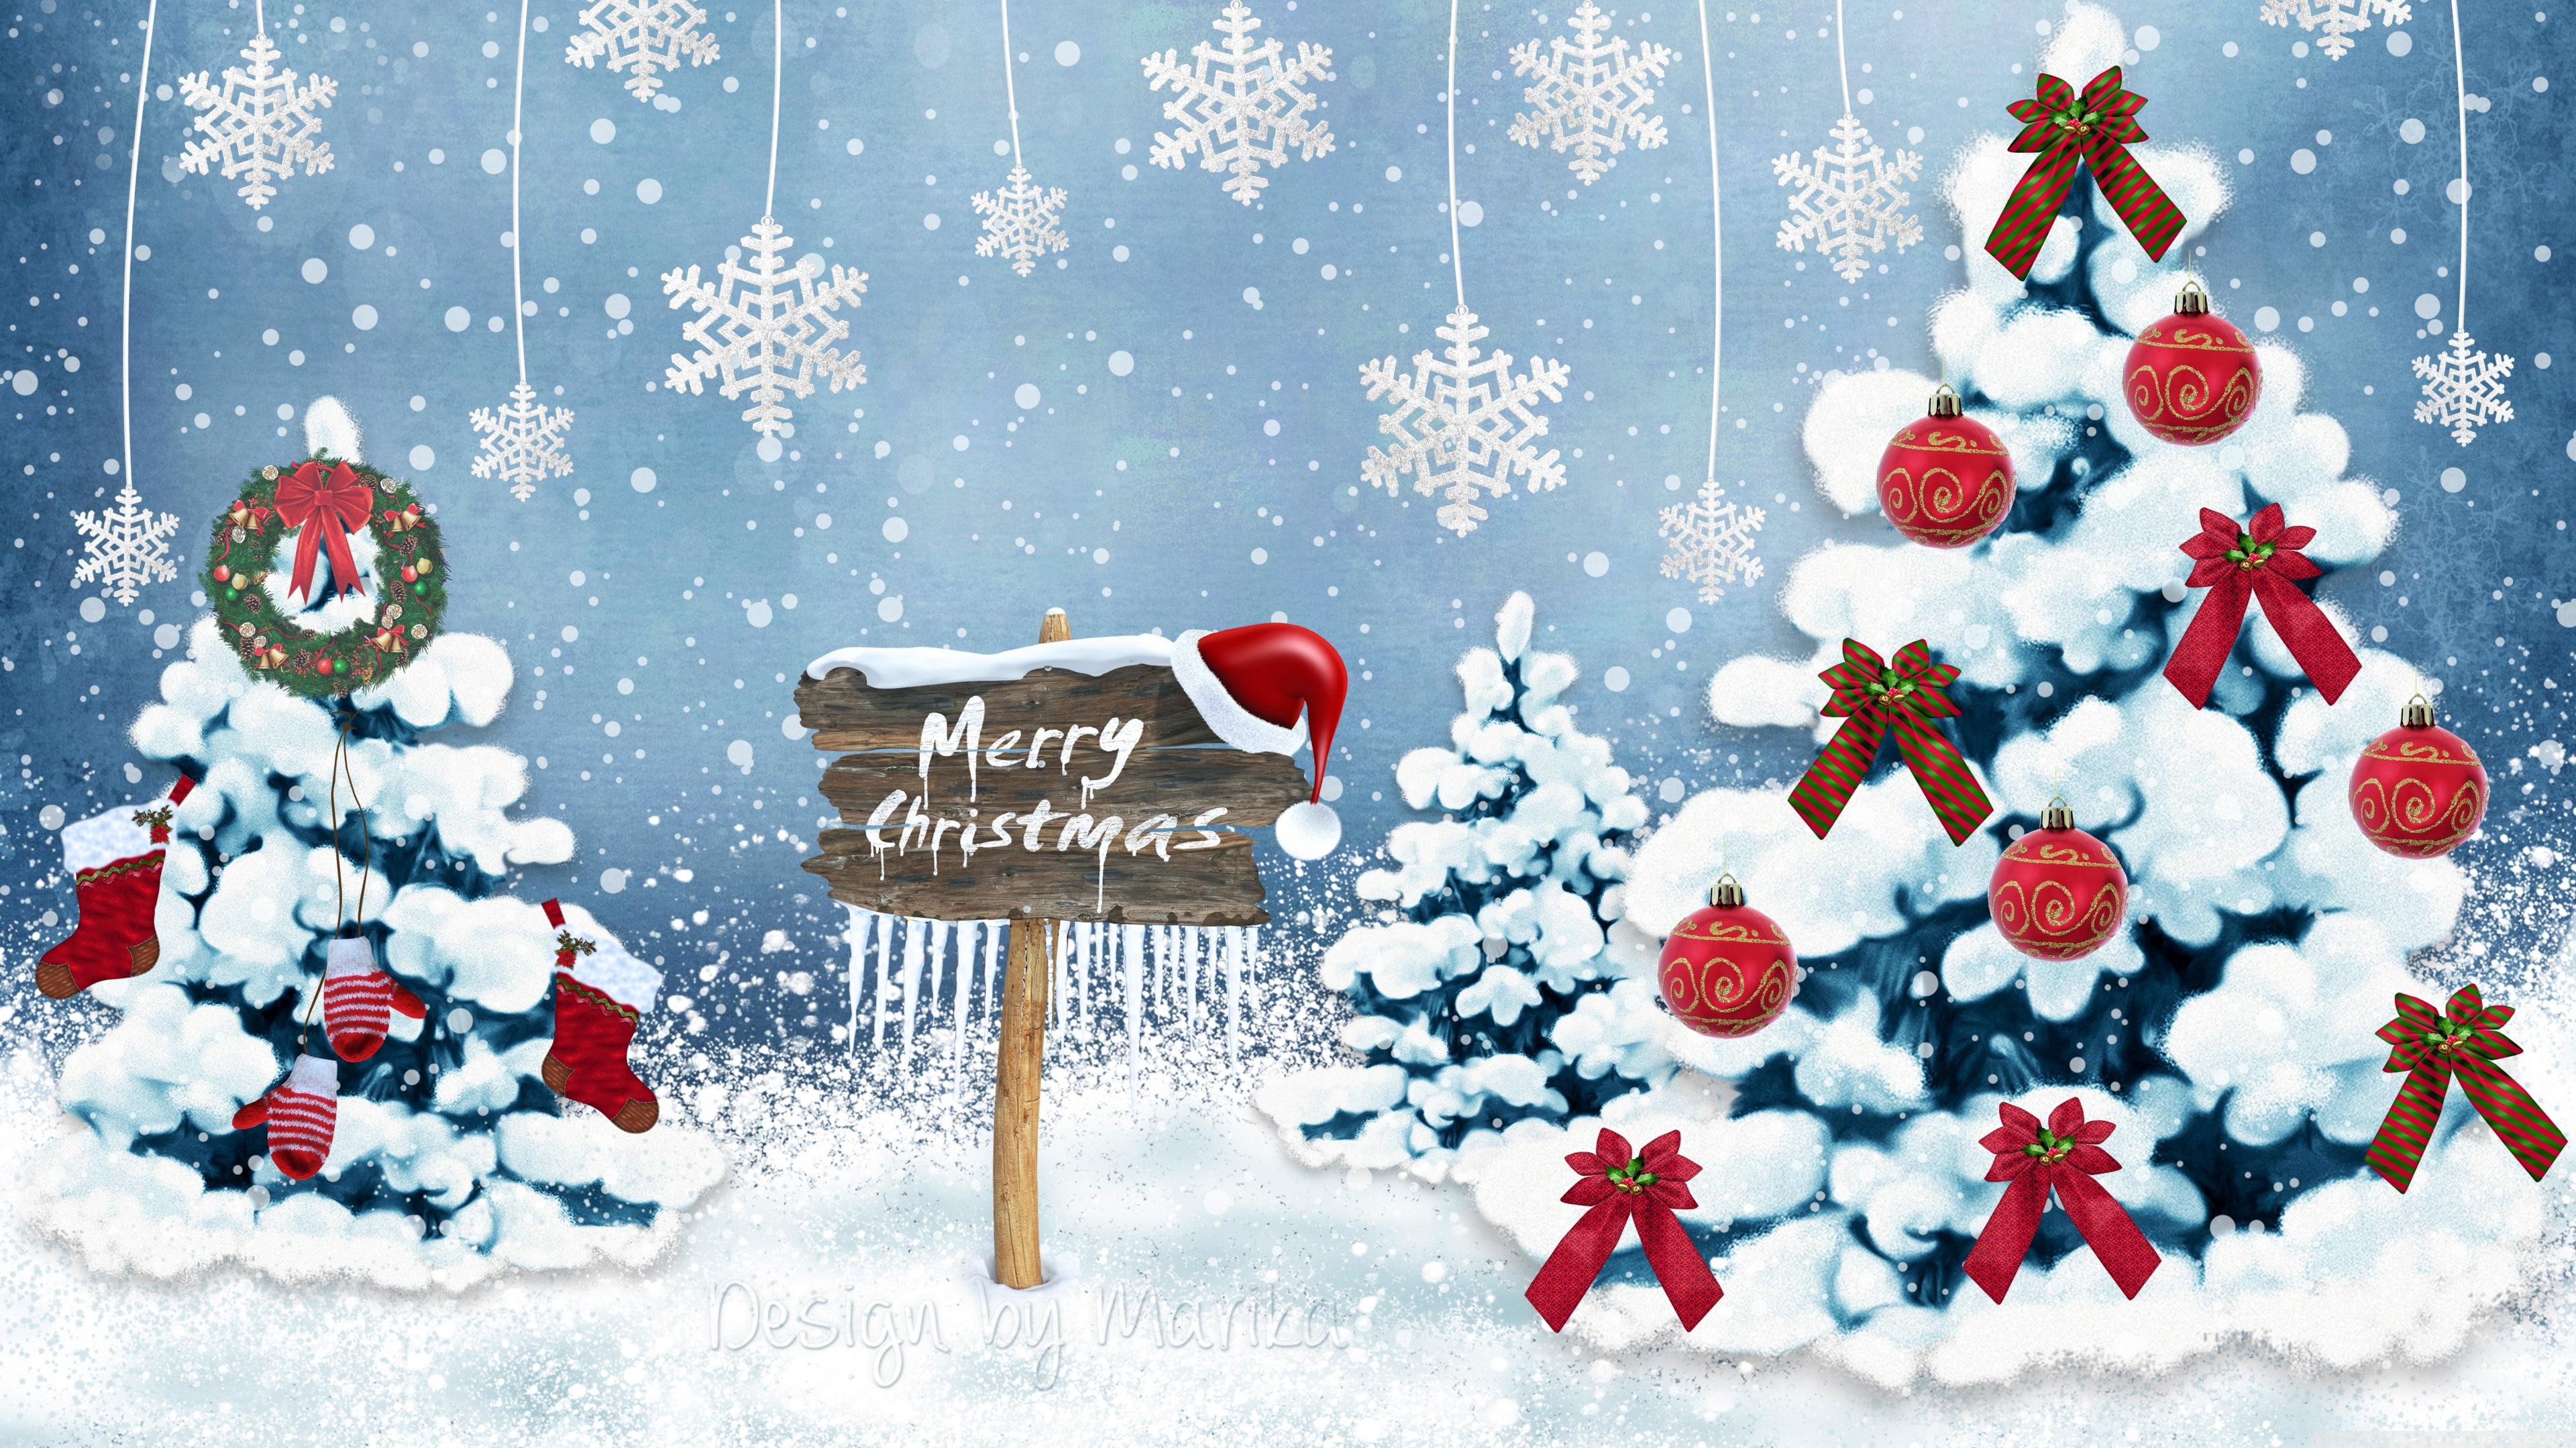 Merry Christmas Ultra HD Desktop Background Wallpaper For 4k